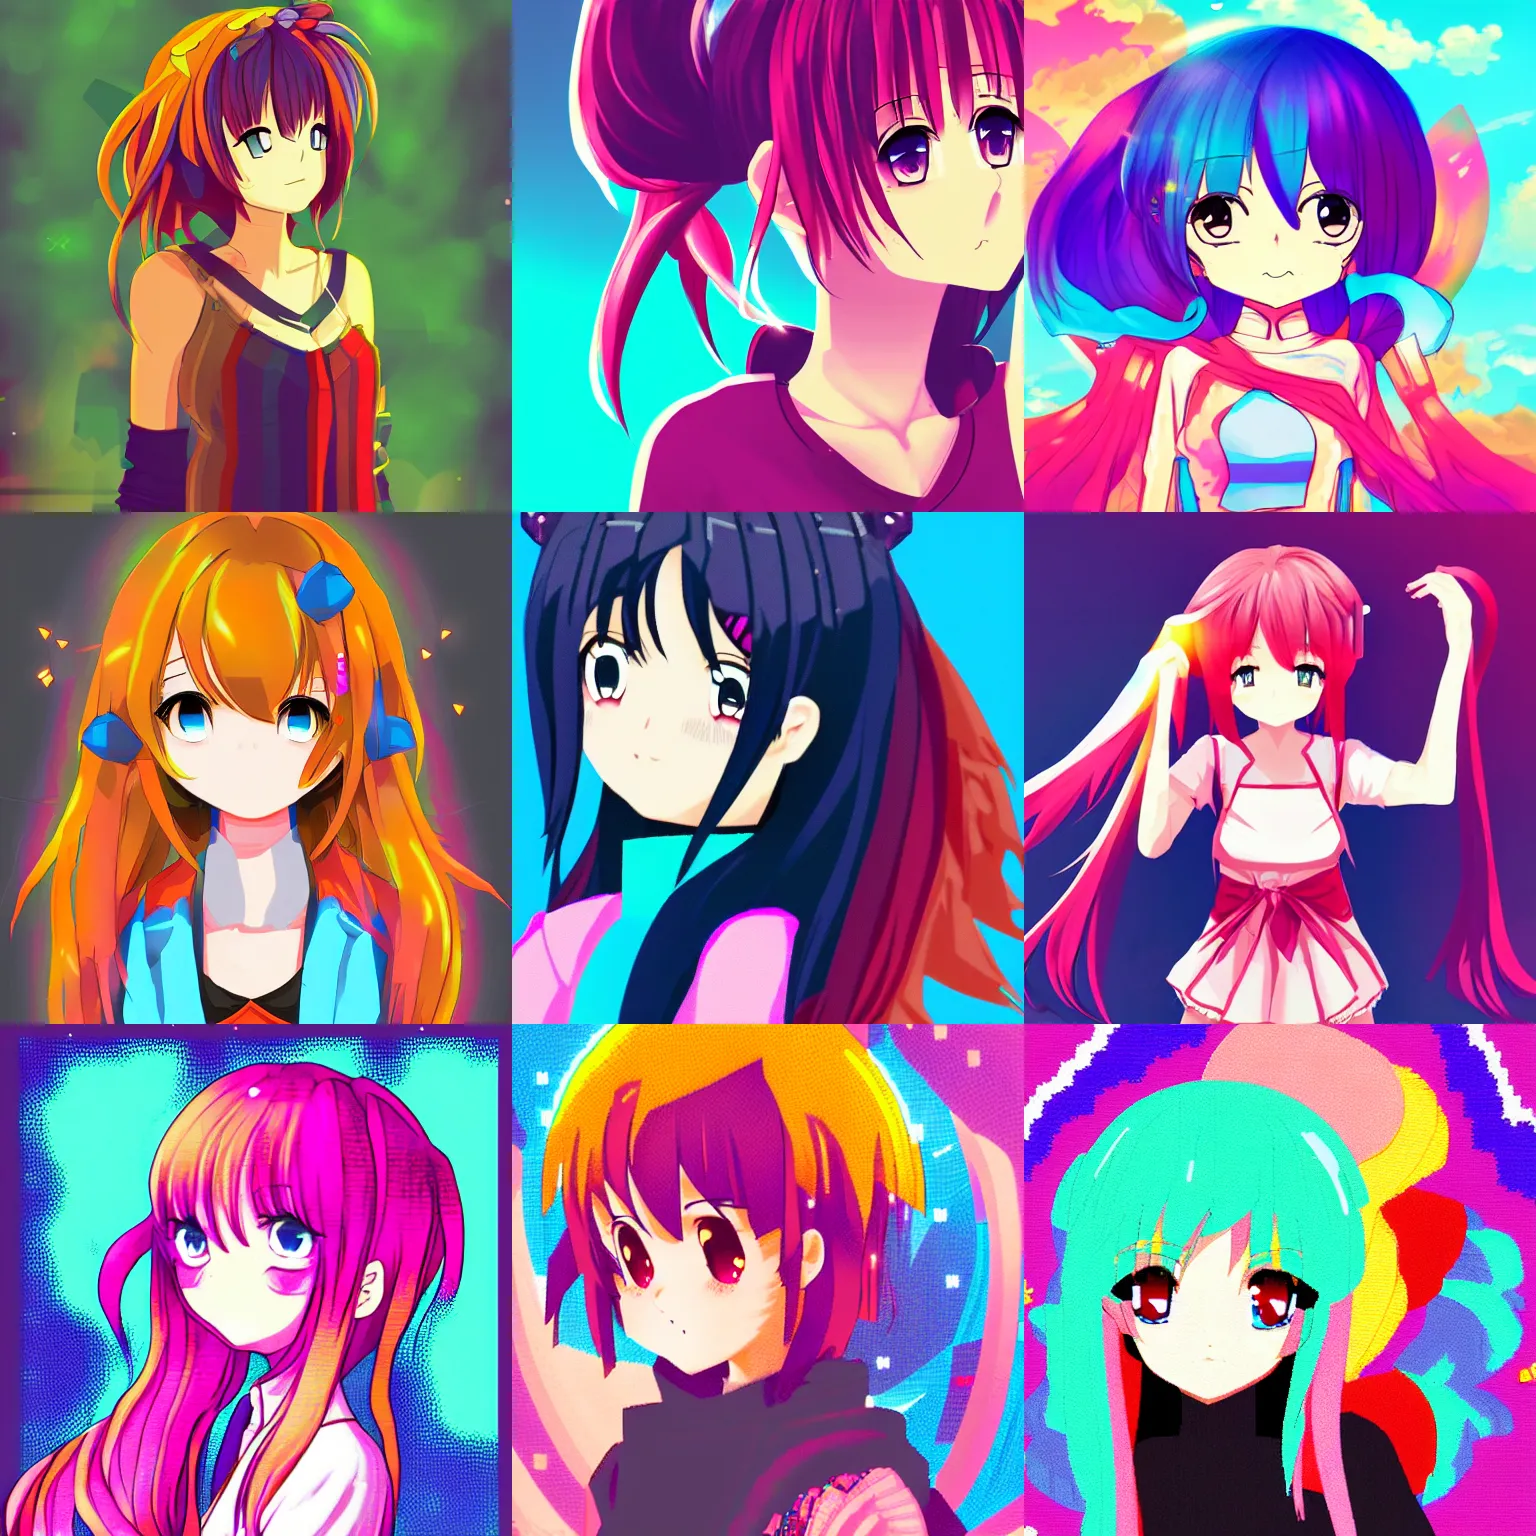 Prompt: anime girl, colorful, fantastic lighting, pixel art, 1 6 bits, 2 d